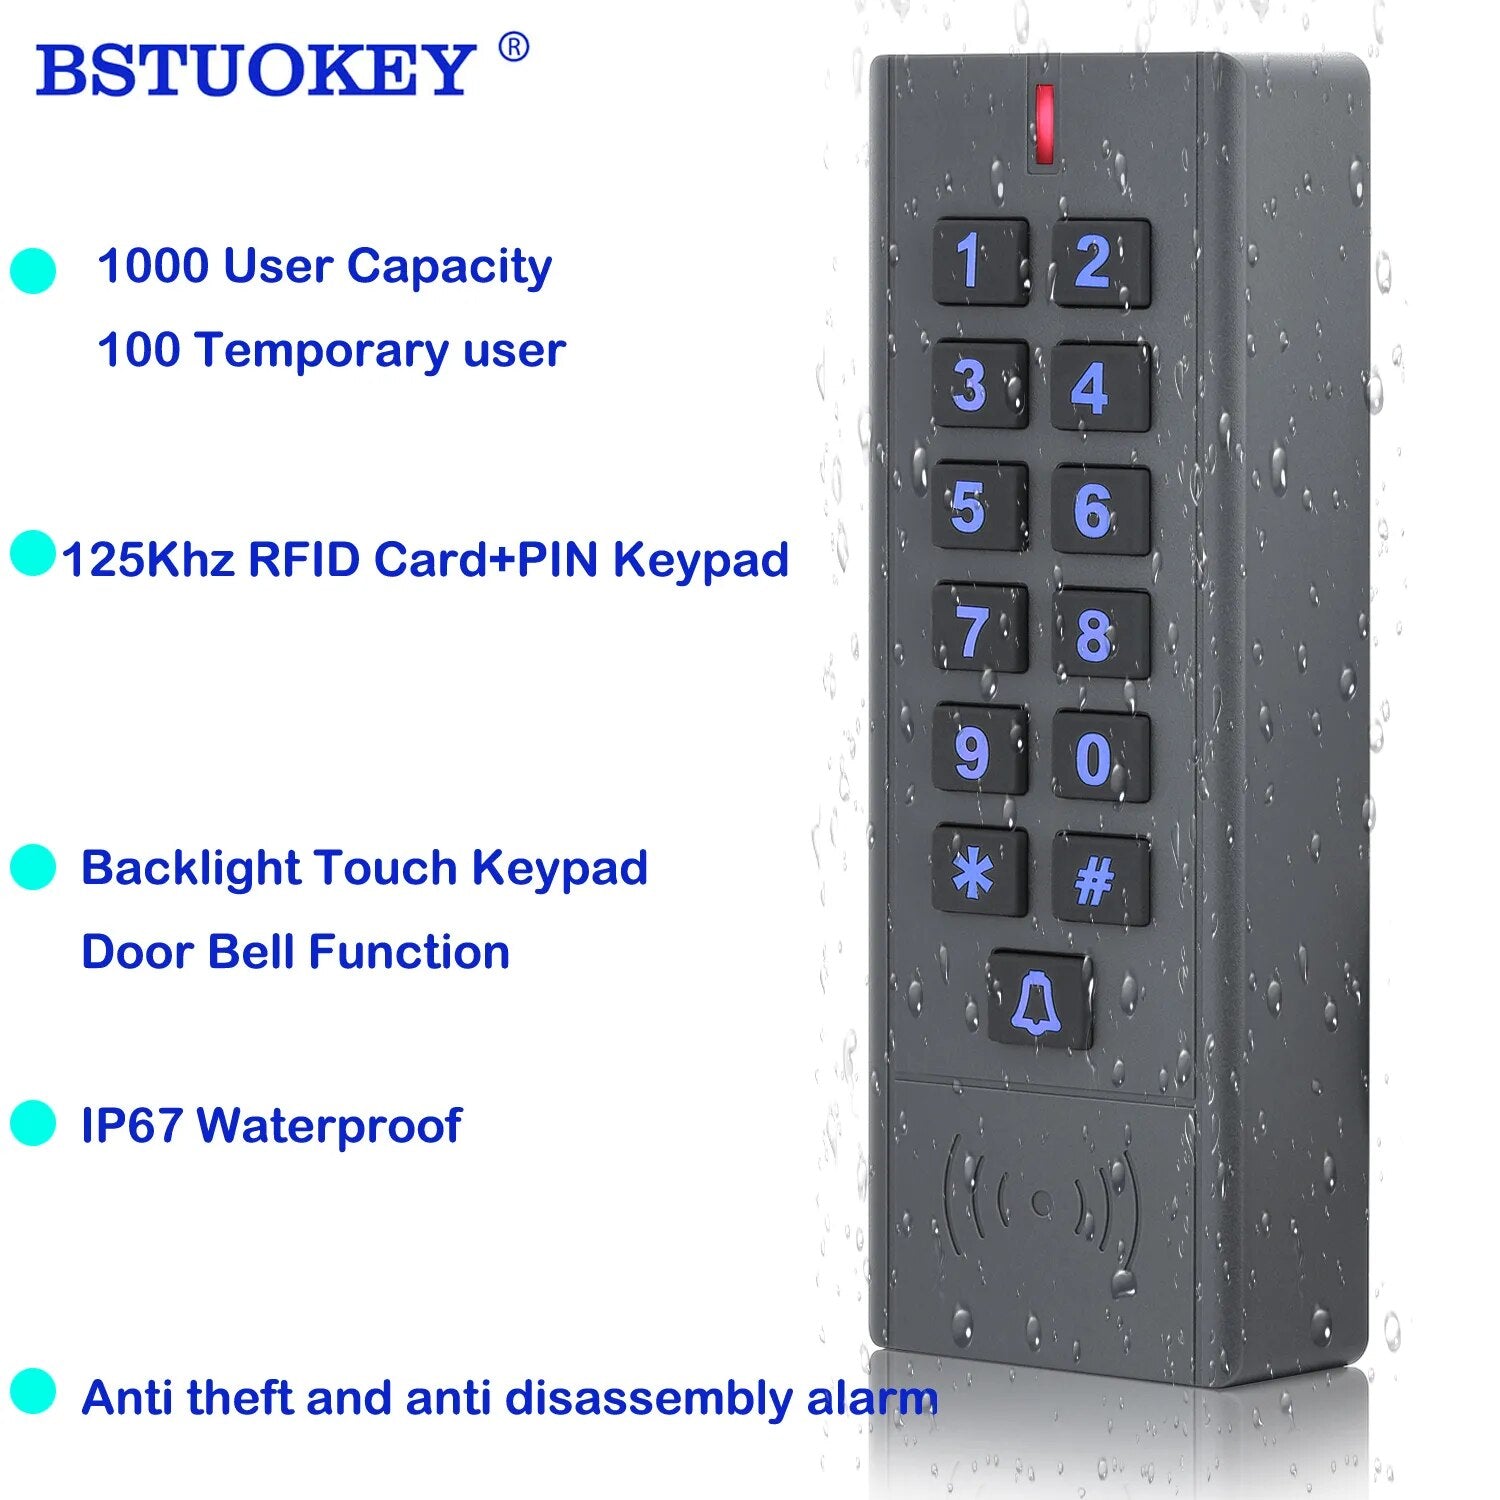 A9-S-EM 1000 User IP67 Waterproof Access Control Keypad Outdoor RFID Access Controller Door Opener System EM4100 125KHz Key Card